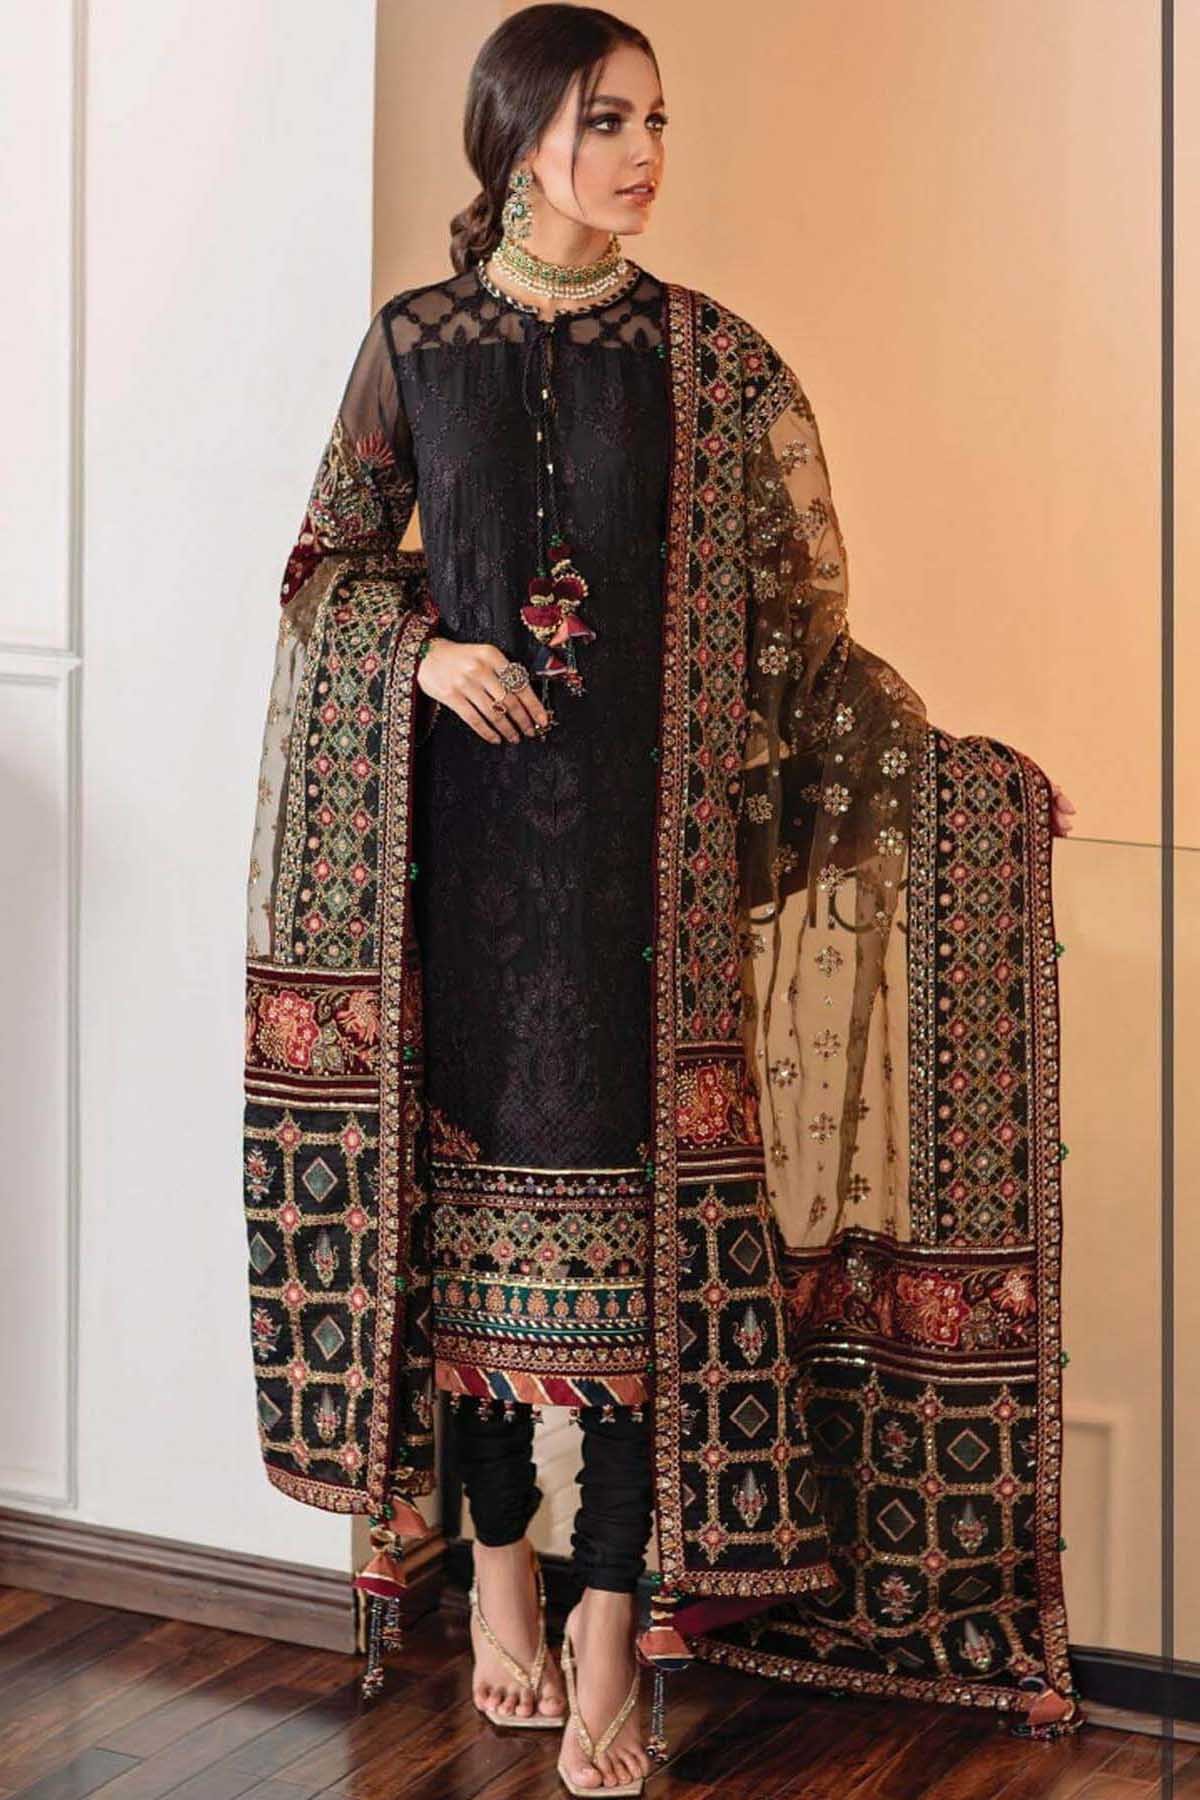 Baroque women new dress design empires collection pakistan top brand clothing brand fashion 3 piece black suit